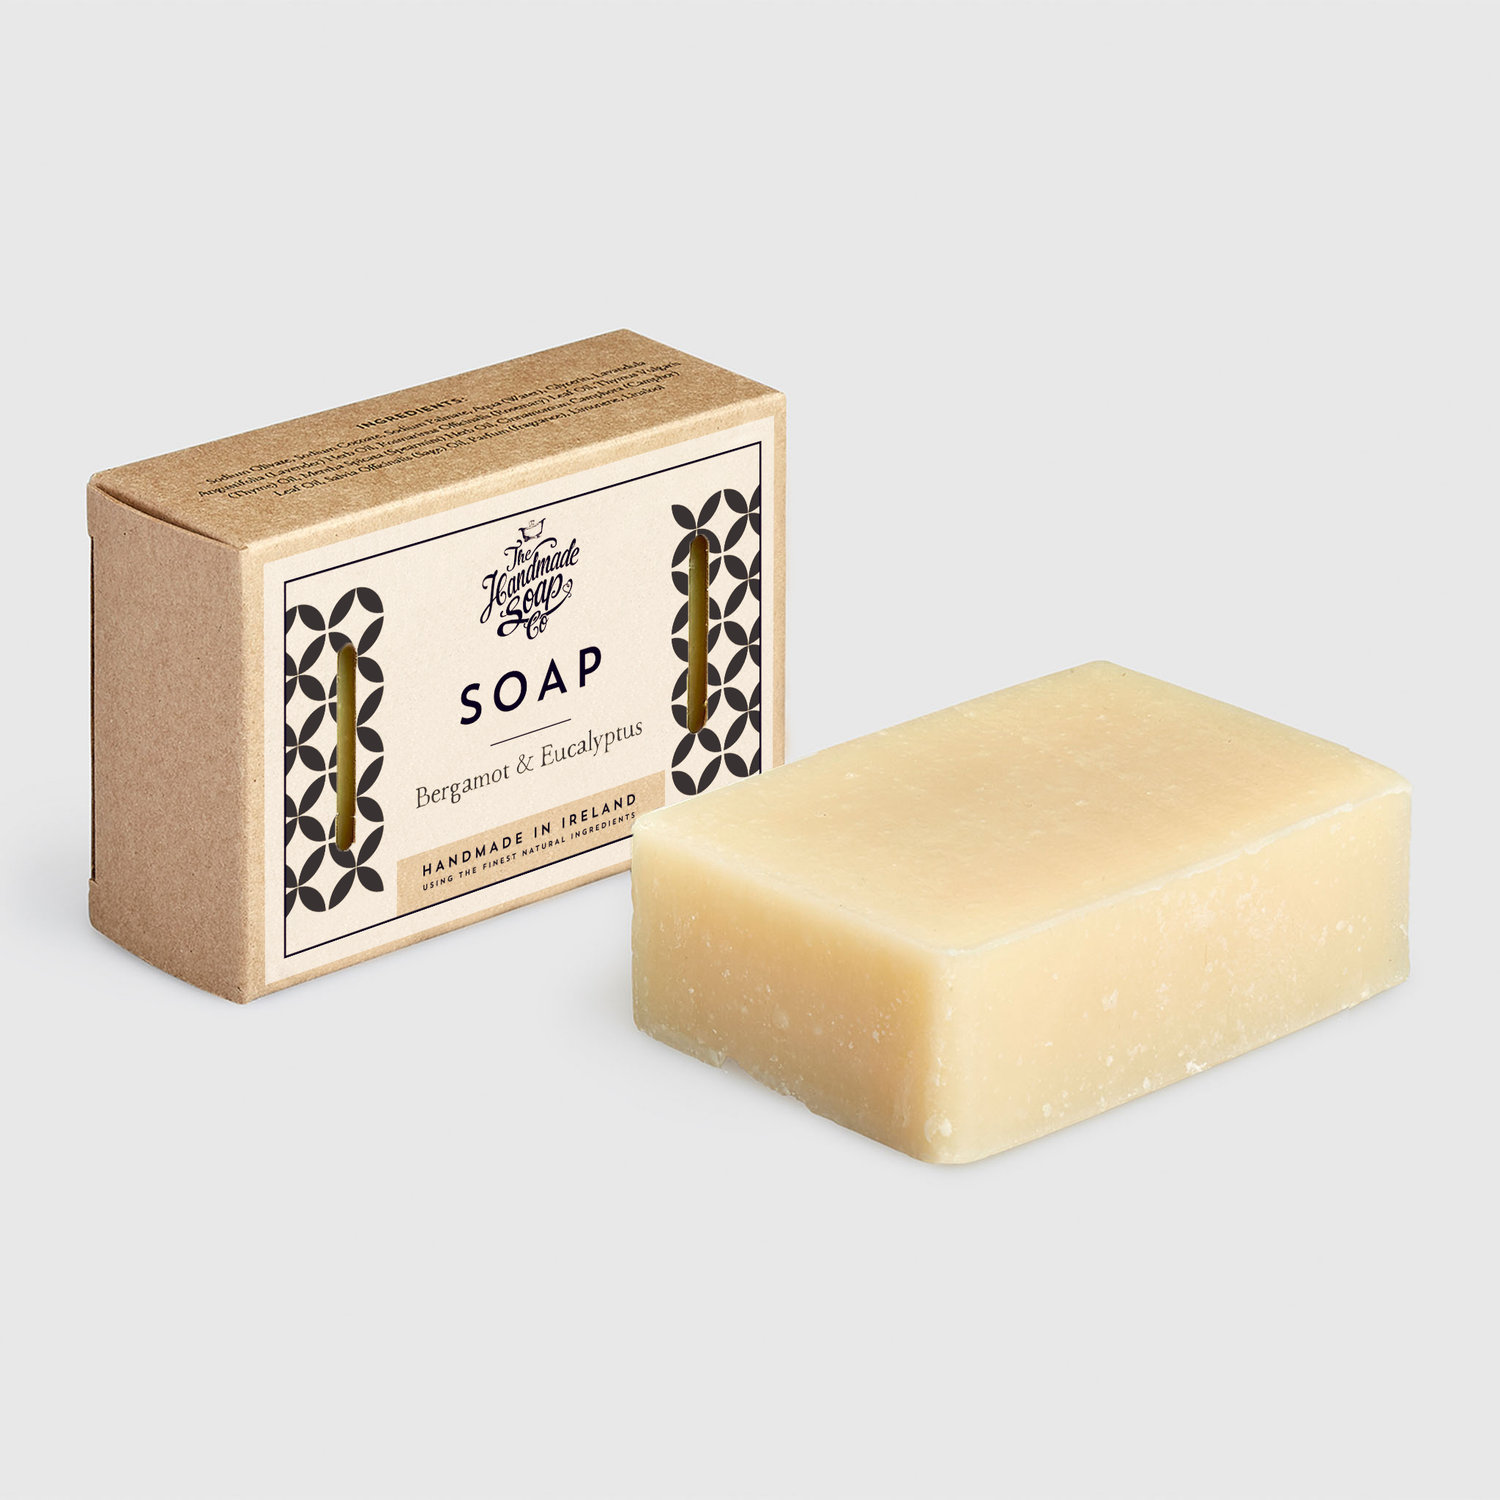 Natural soaps